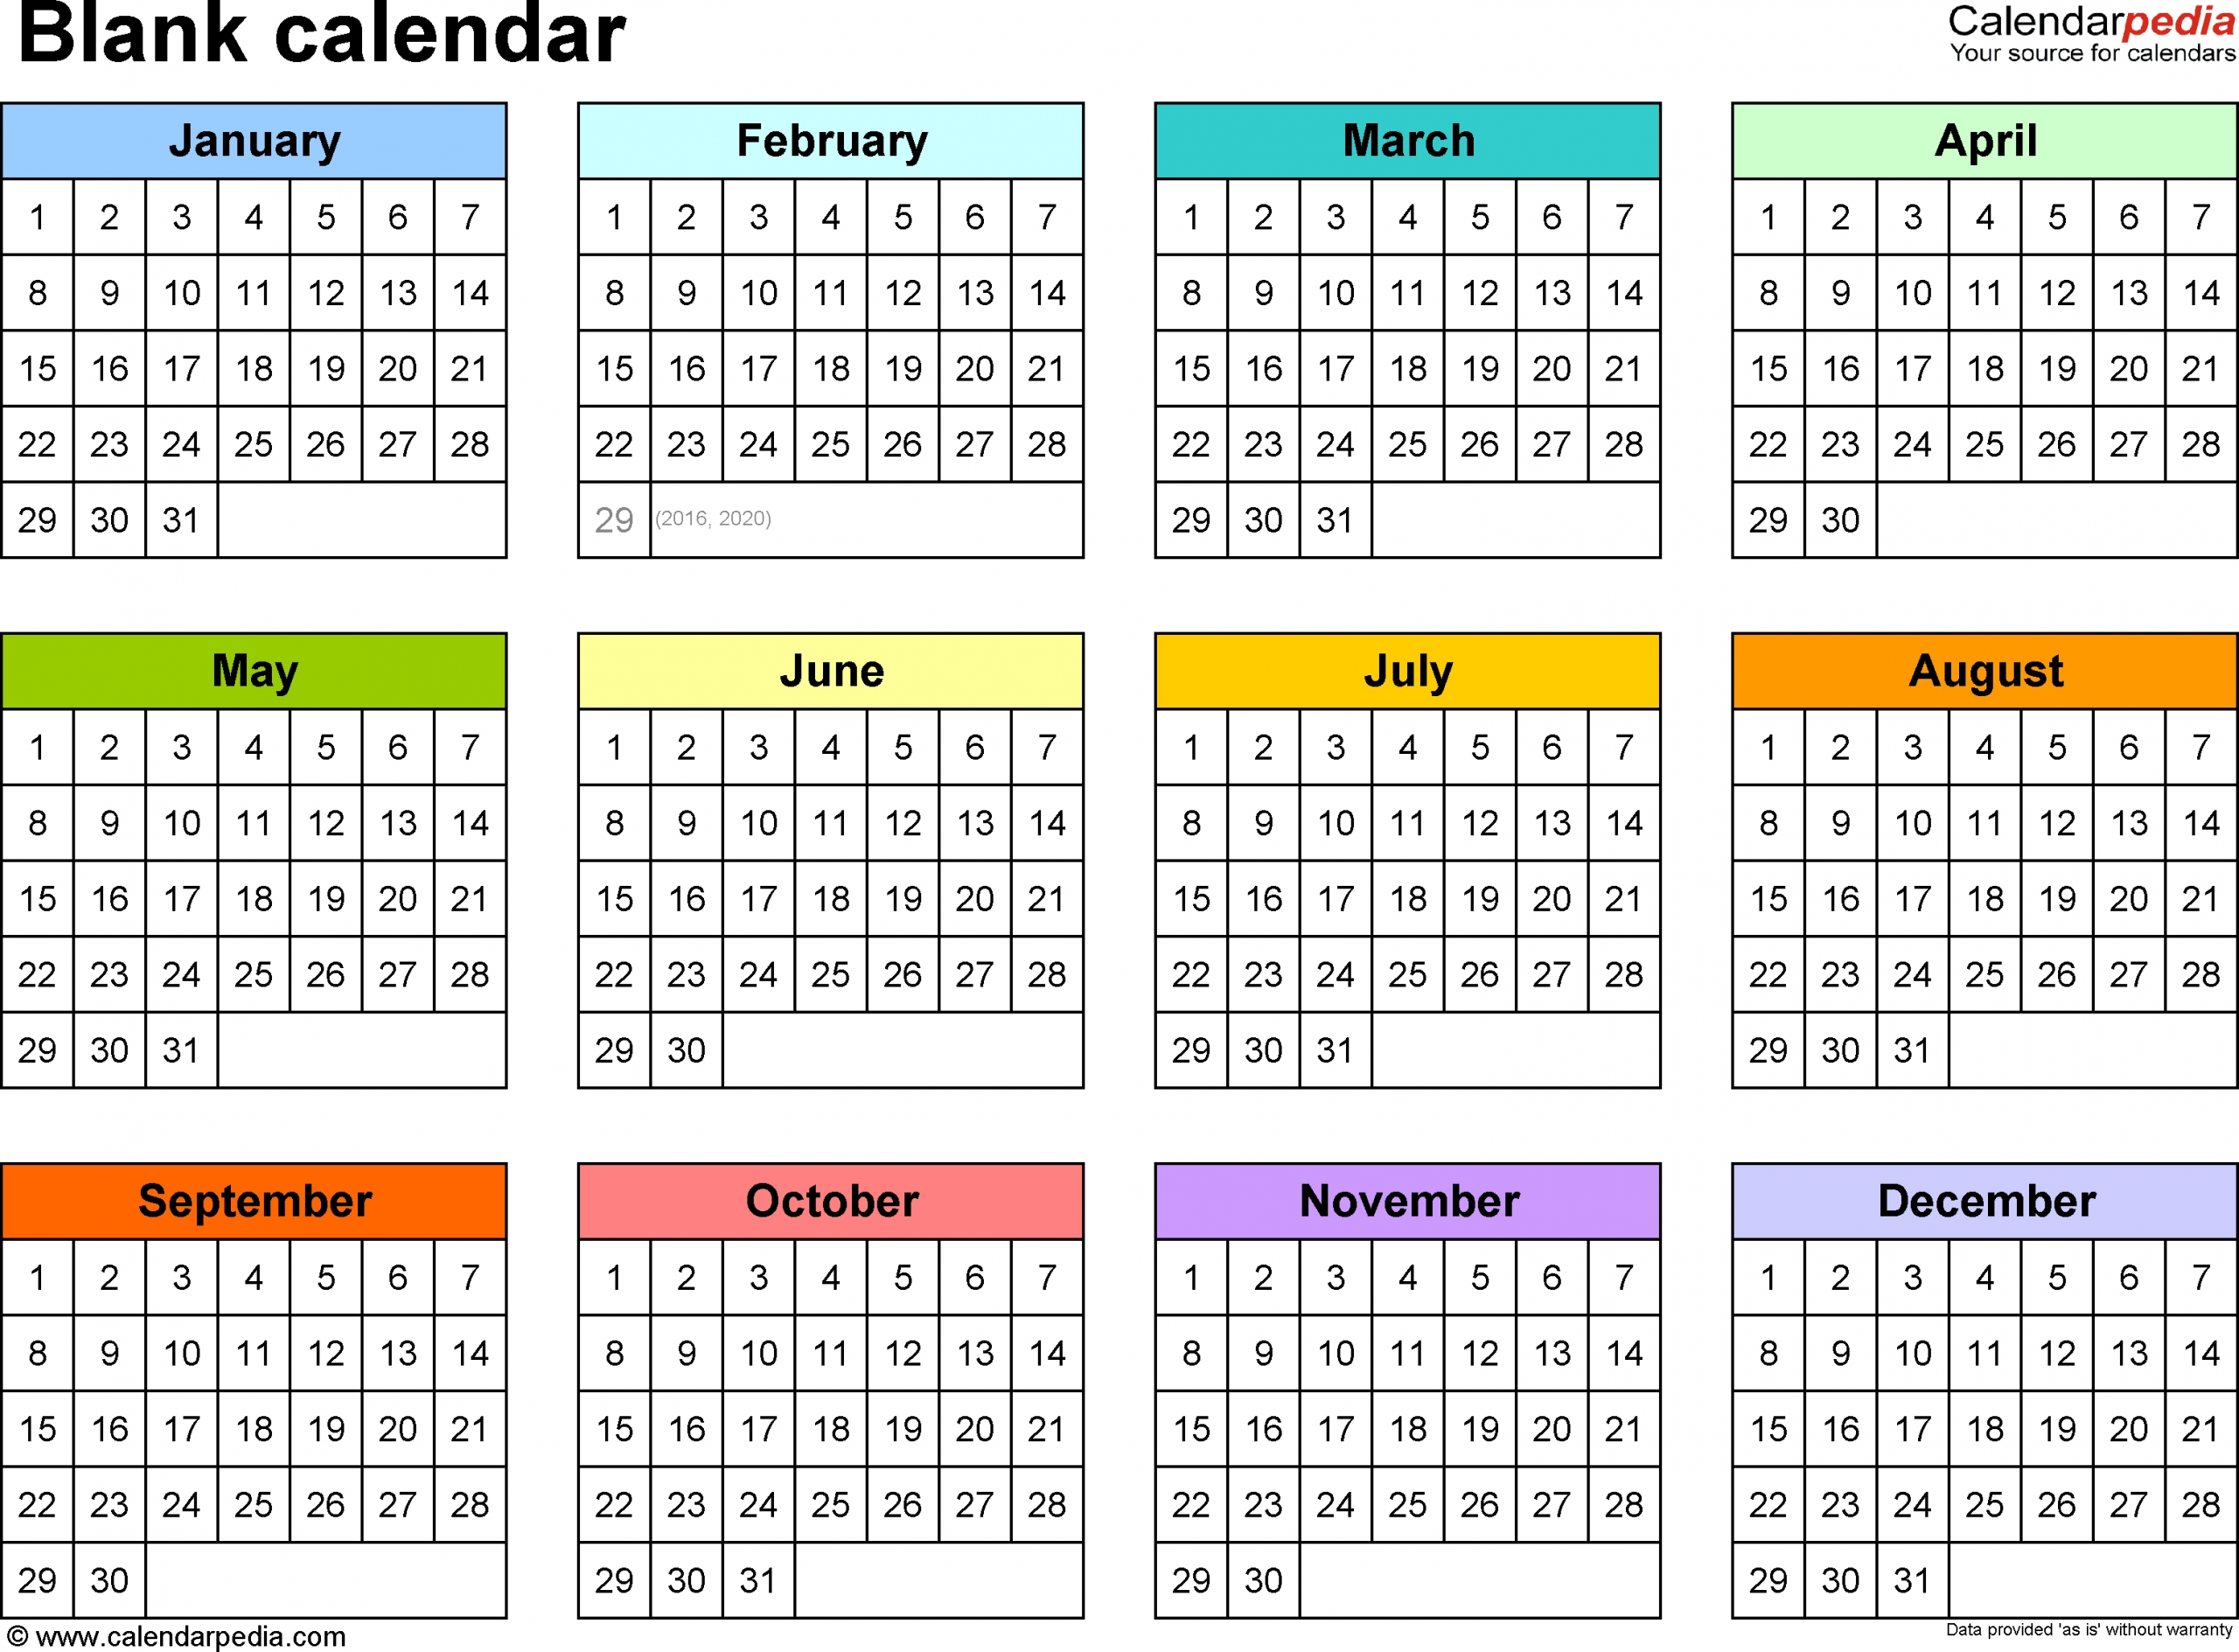 Blank Calendar - 9 Free Printable Microsoft Word Templates Blank Calendar Whole Year